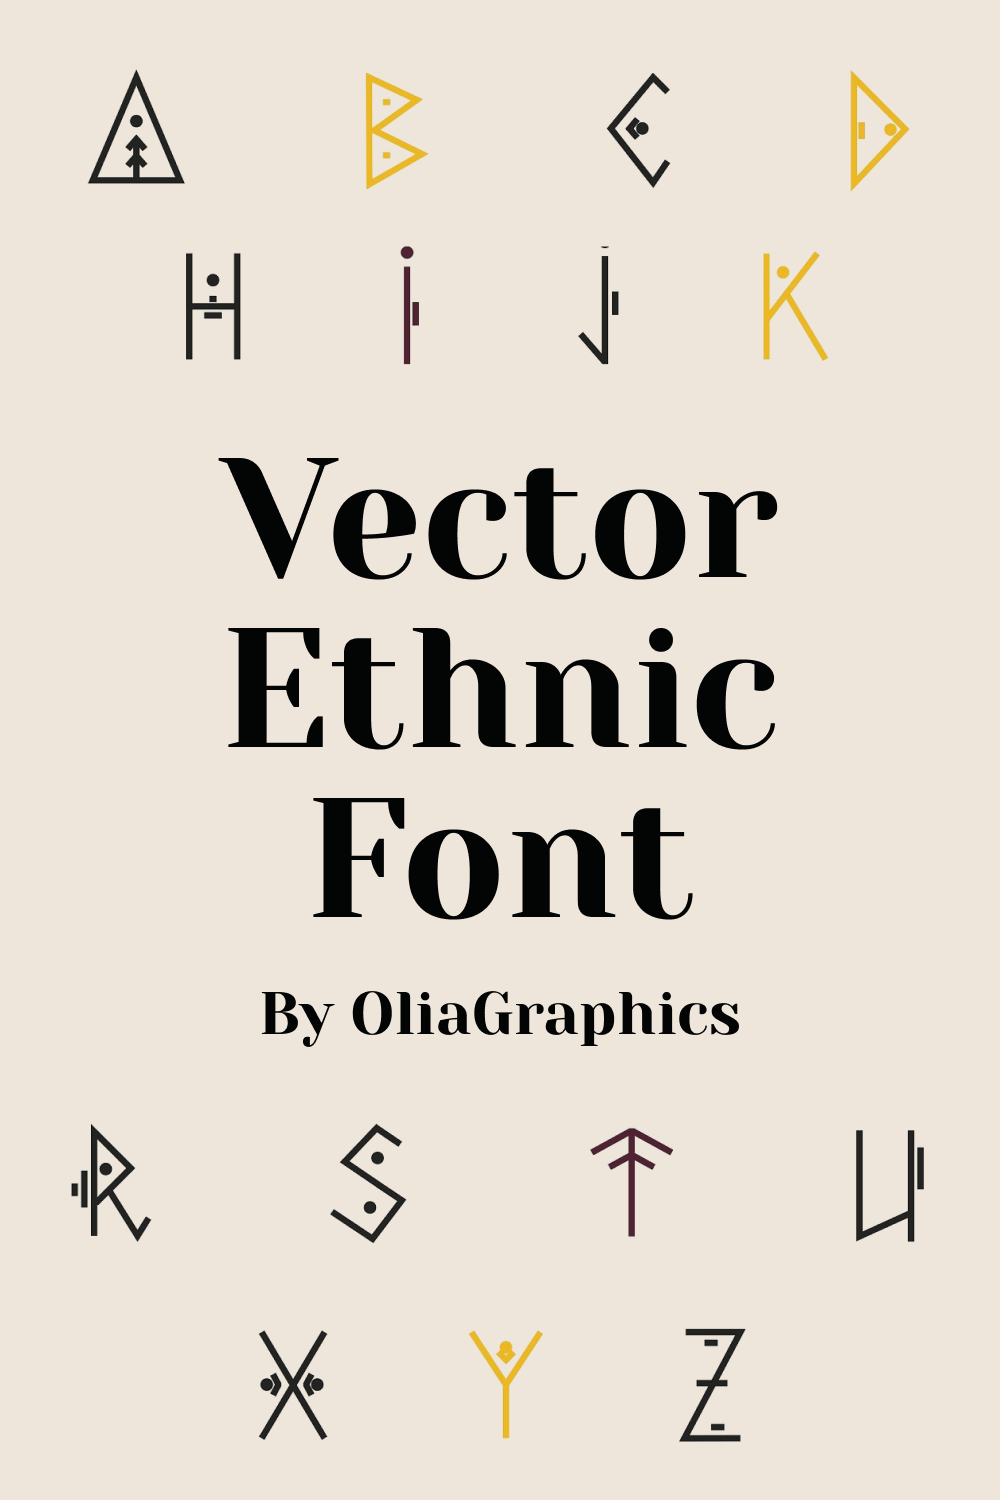 Vector ethnic font of pinterest.